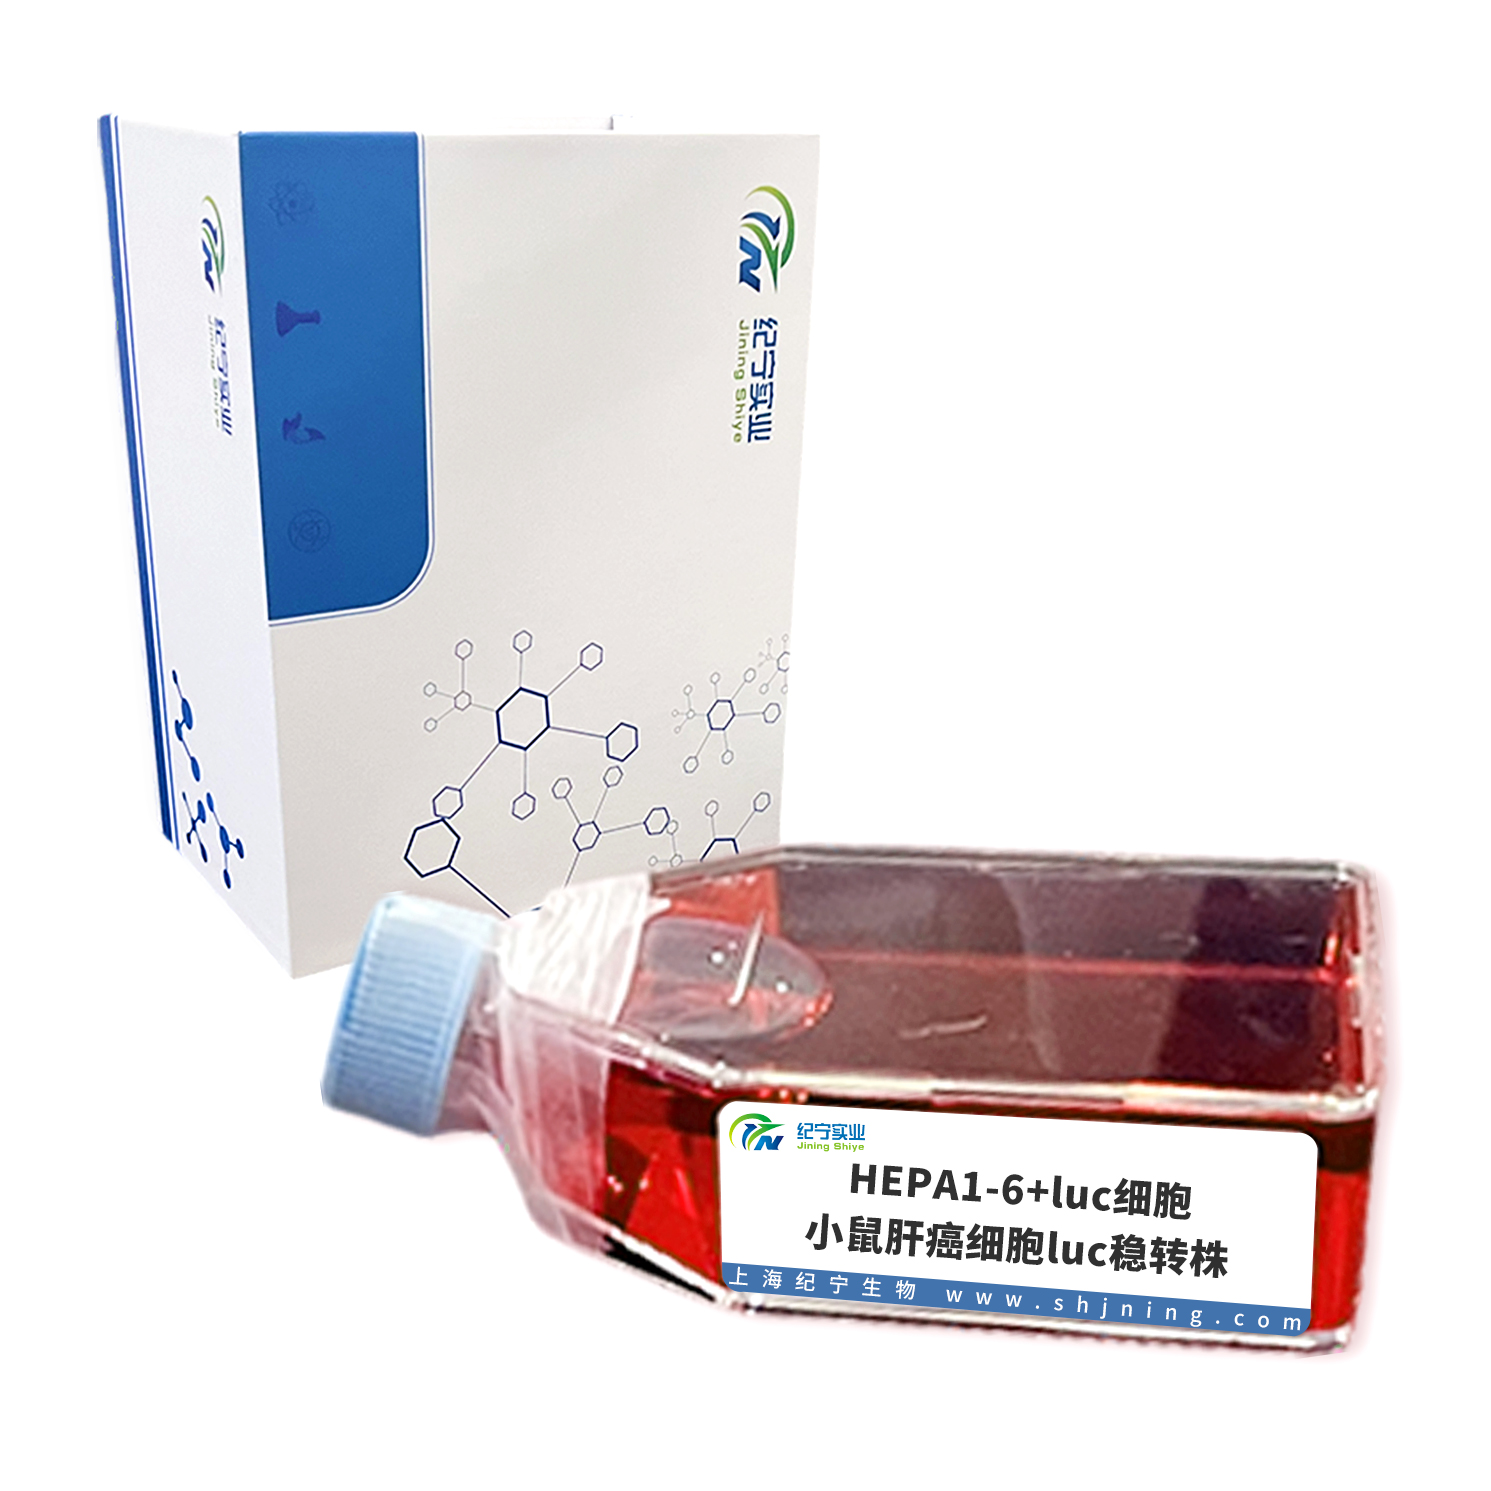 HEPA1-6+luc细胞＿小鼠肝癌细胞luc稳转株